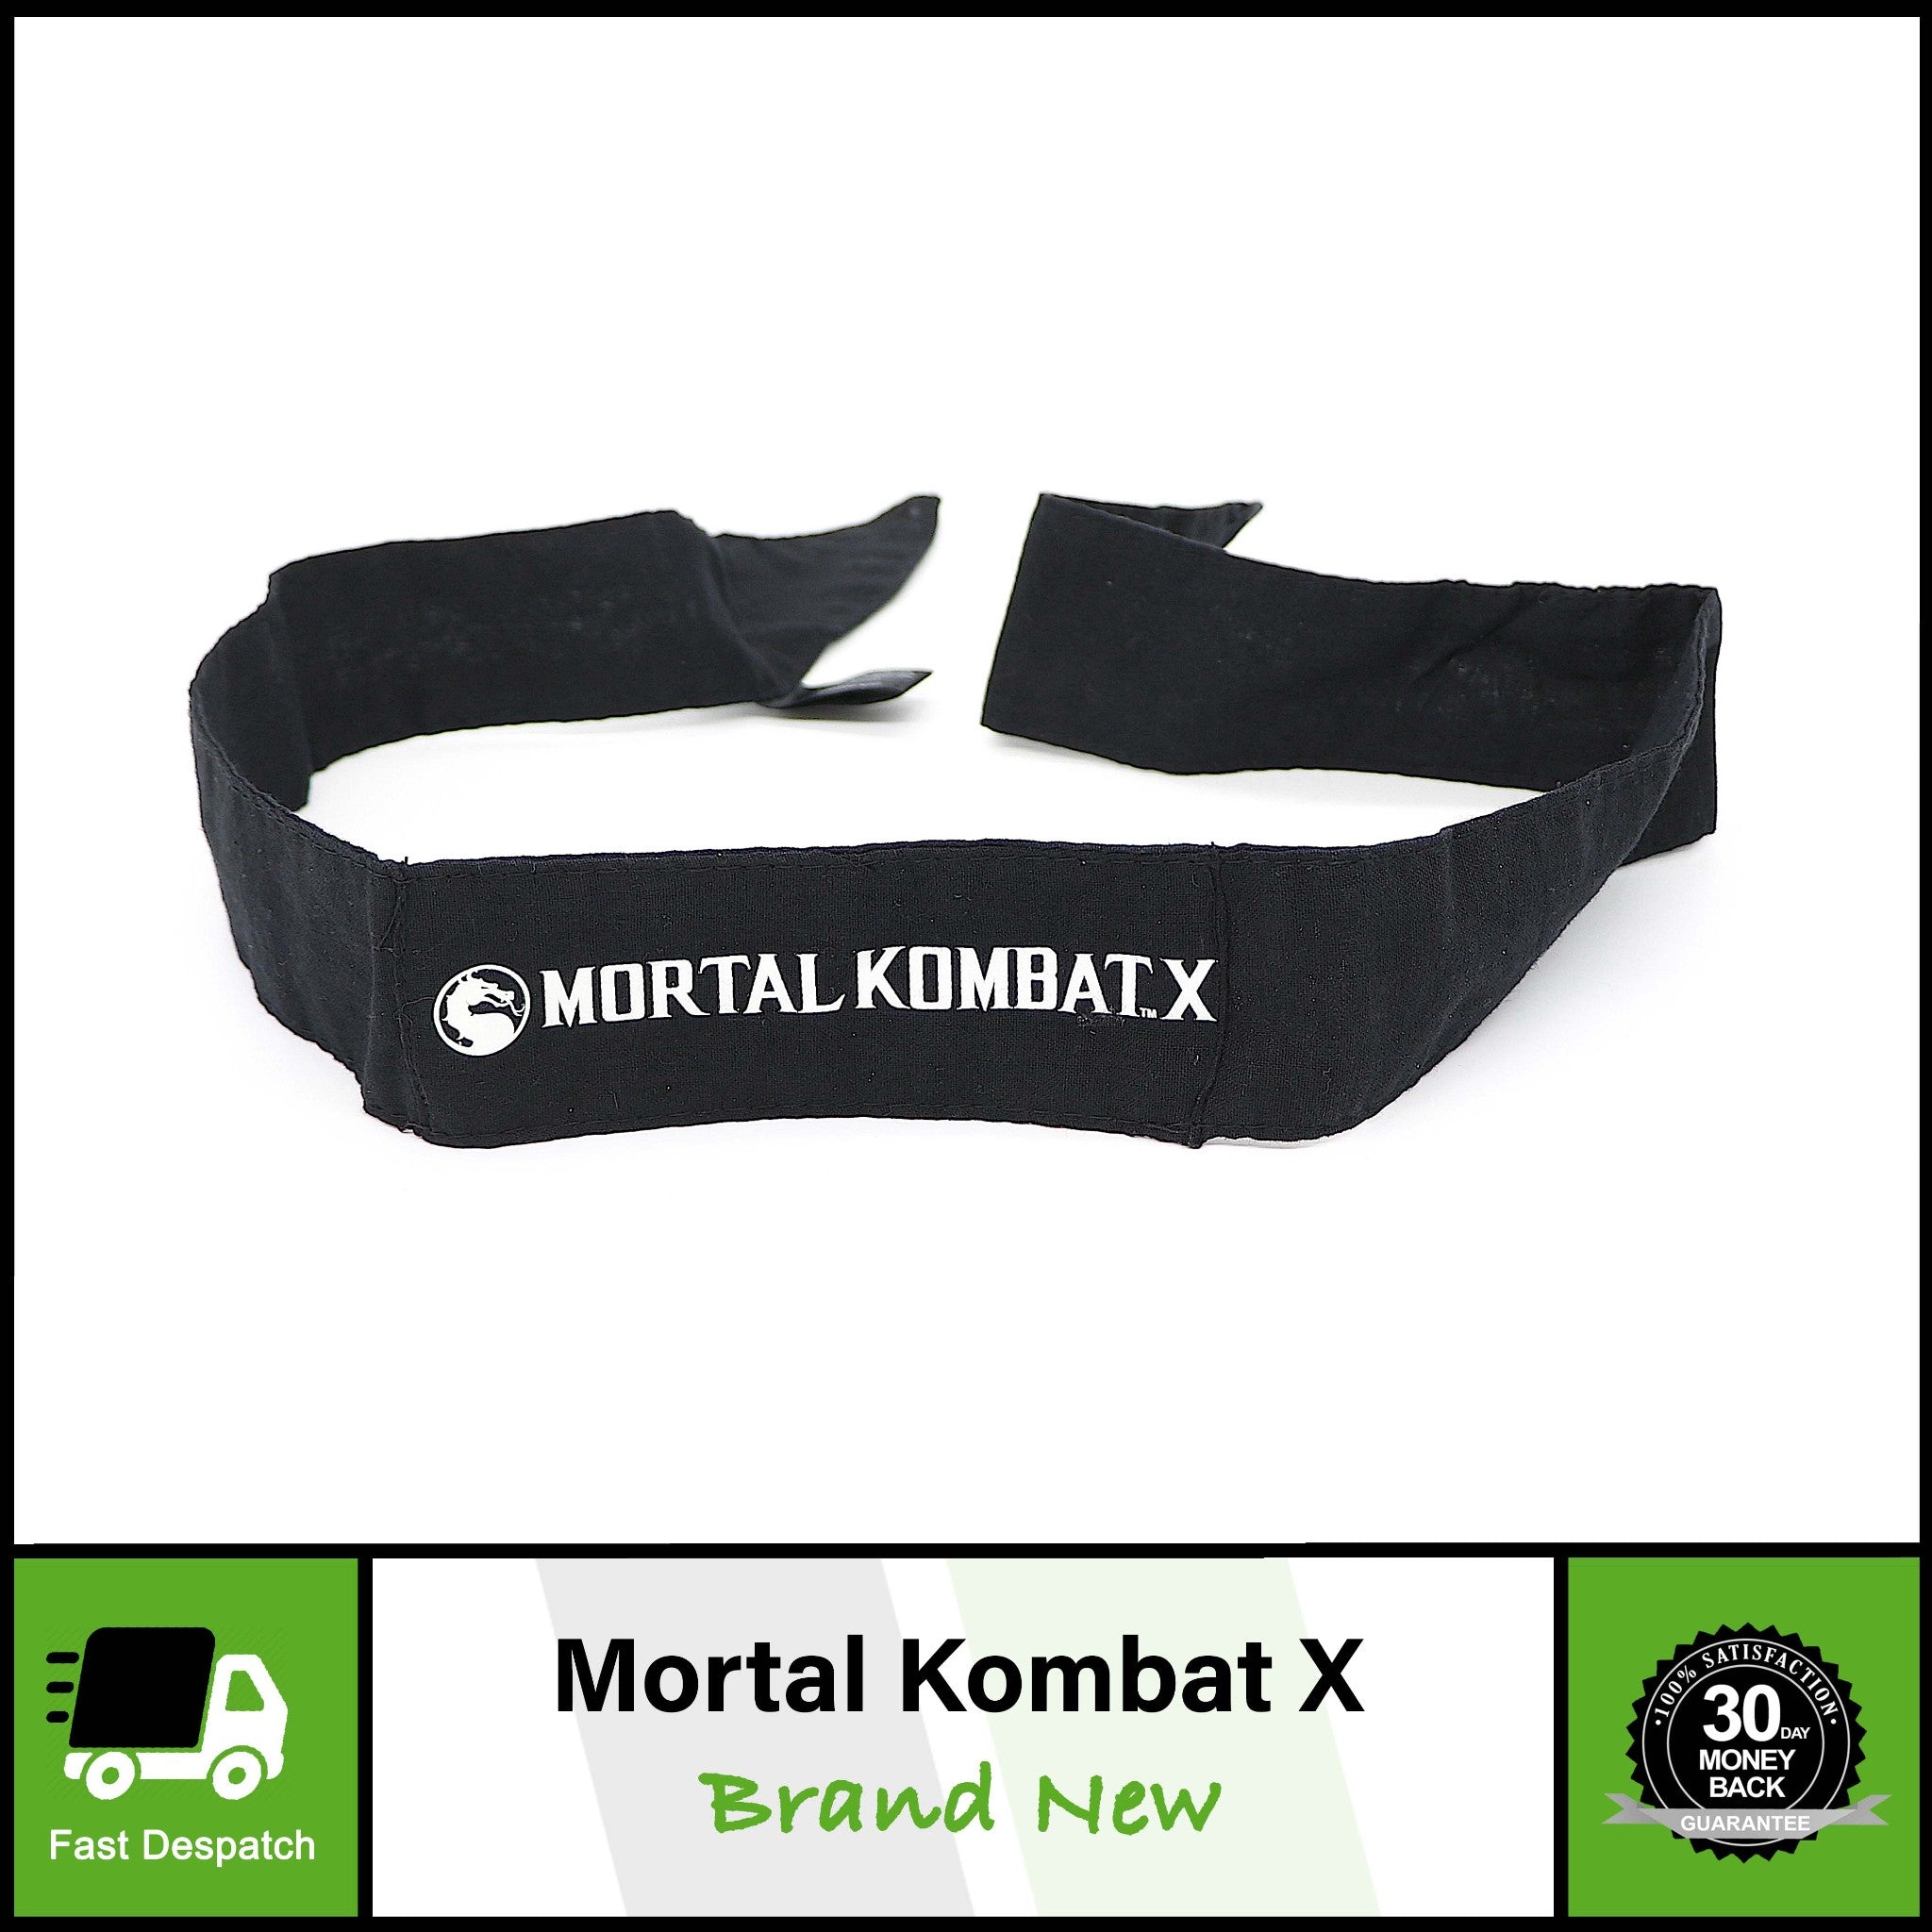 Mortal Kombat X (10) PS4 Xbox One 360 Game Promo Hachimaki Headband